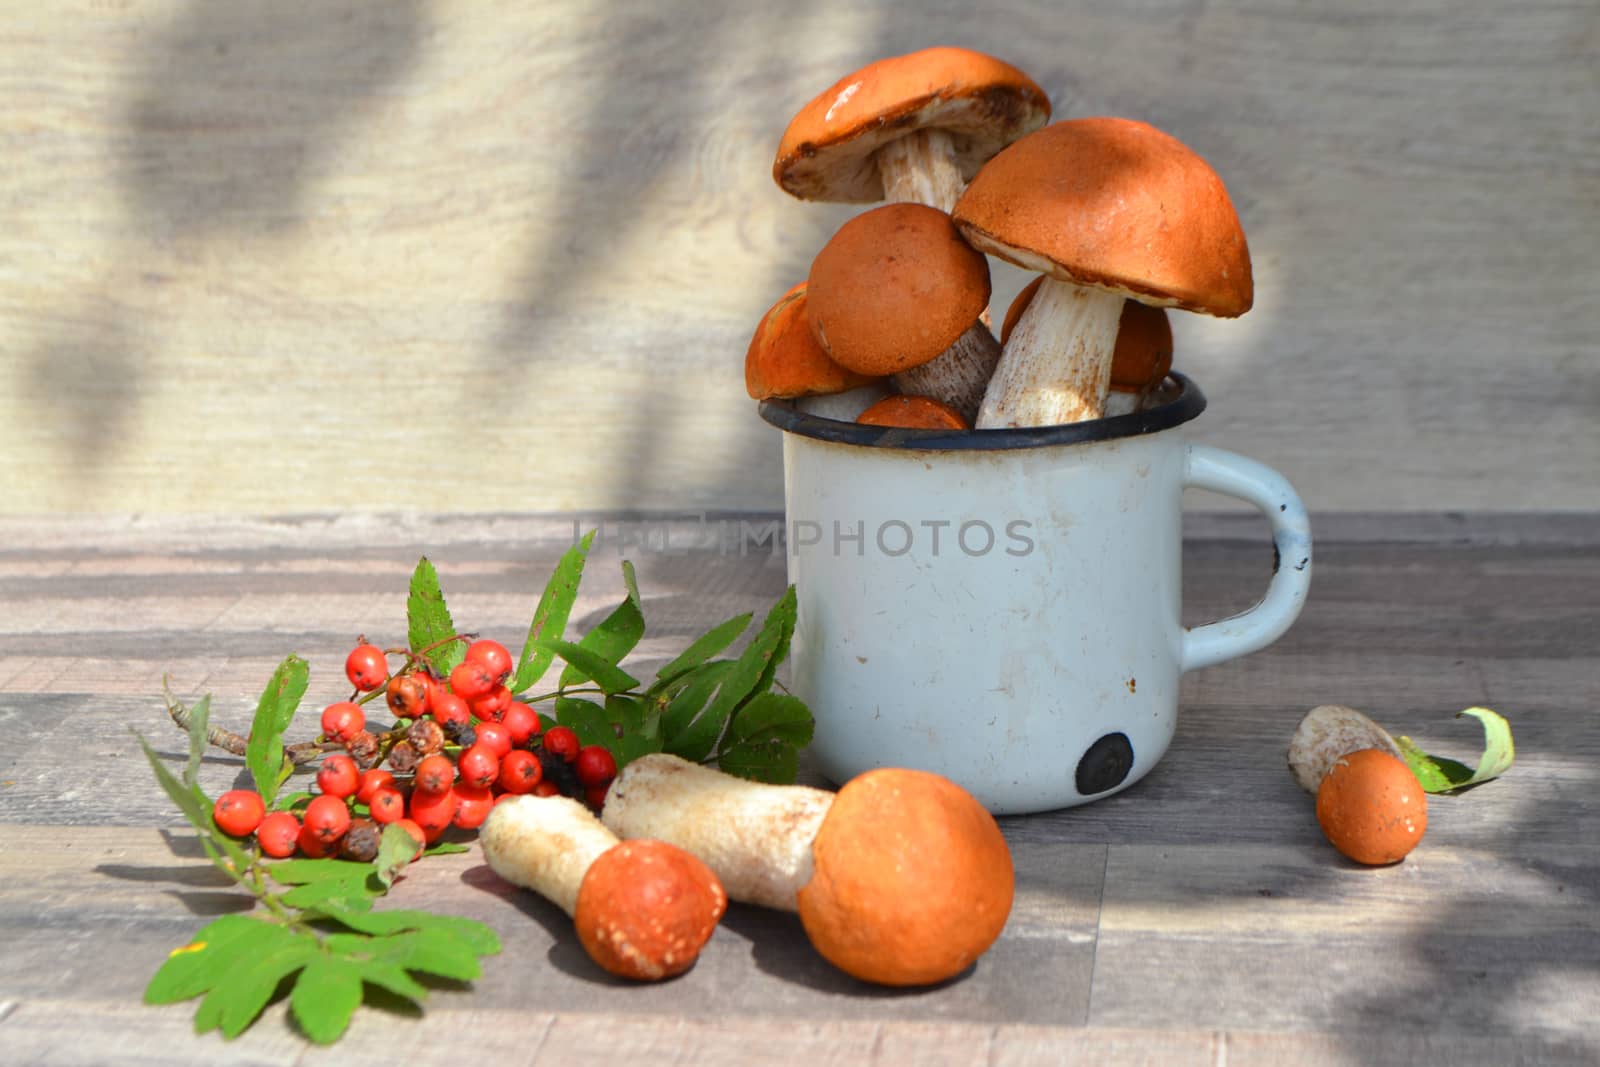 Edible forest mushrooms Leccinum scabrum and Boletus edulis. In rustic metalic mug. Rustic style. Natural day light.